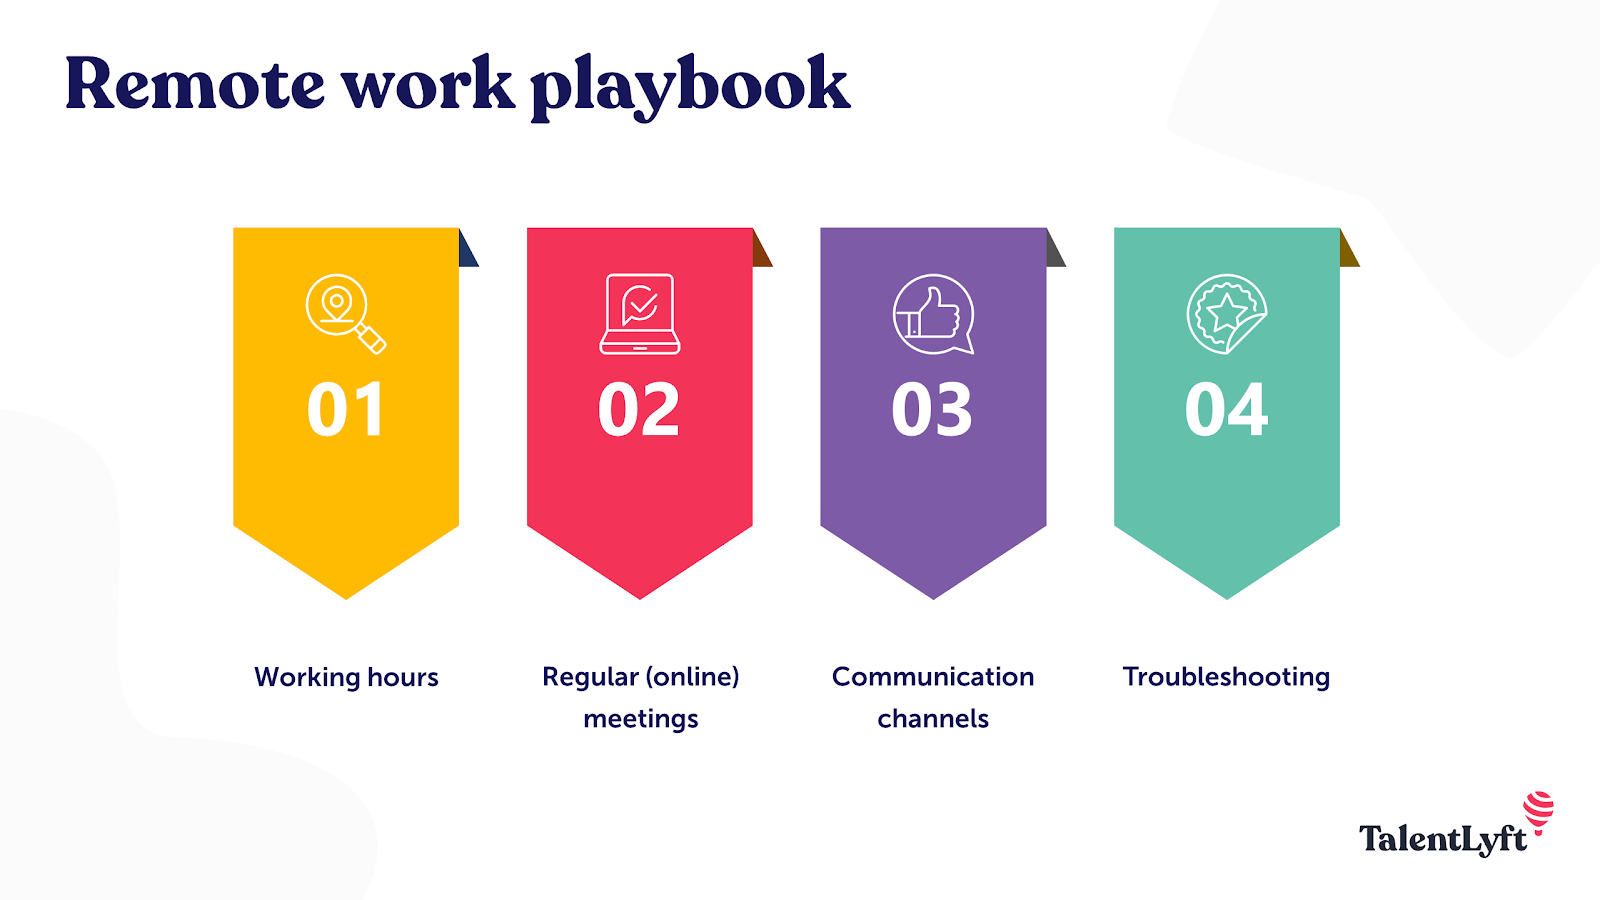 Remote work playbook